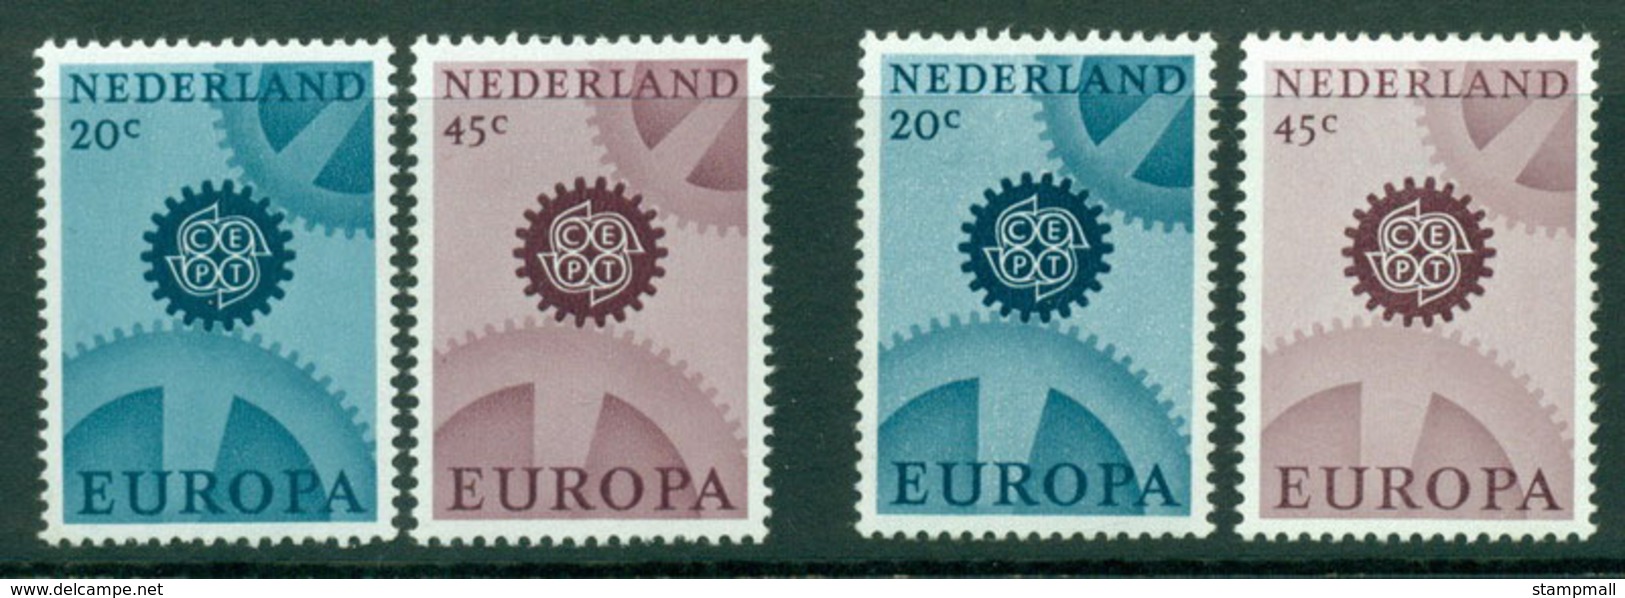 Netherlands 1967 Europa Wmk & No Wmk MUH Lot15577 - Non Classés